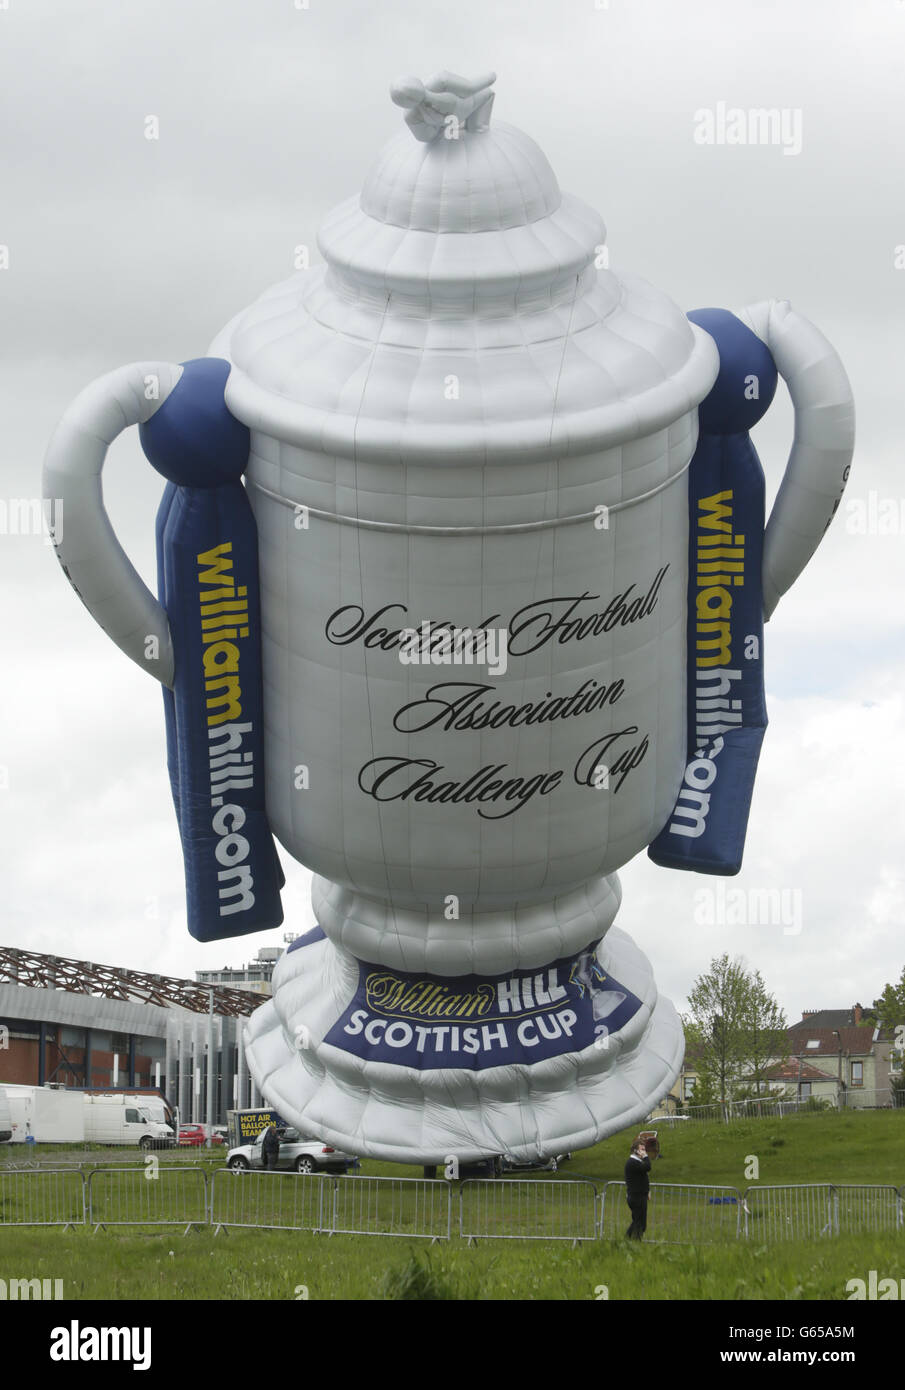 Soccer - William Hill Scottish Cup Final - Hibernian v Celtic - Hampden Park. William Hill branding ahead of the William Hill Scottish Cup Final at Hampden Park, Glasgow. Stock Photo